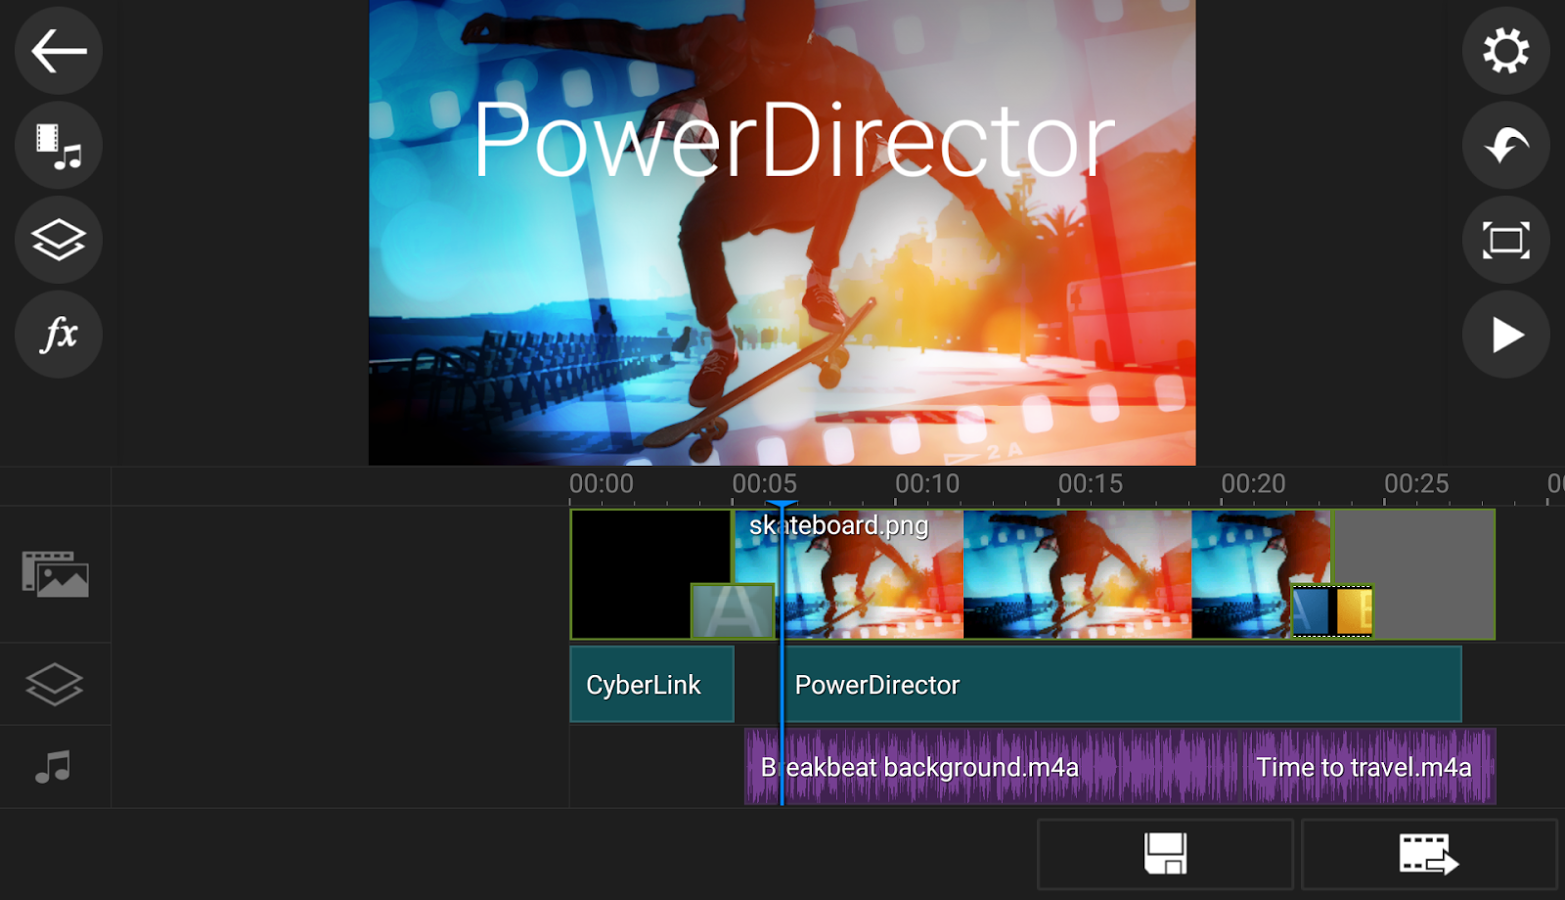 Download PowerDirector Video Editor App Available